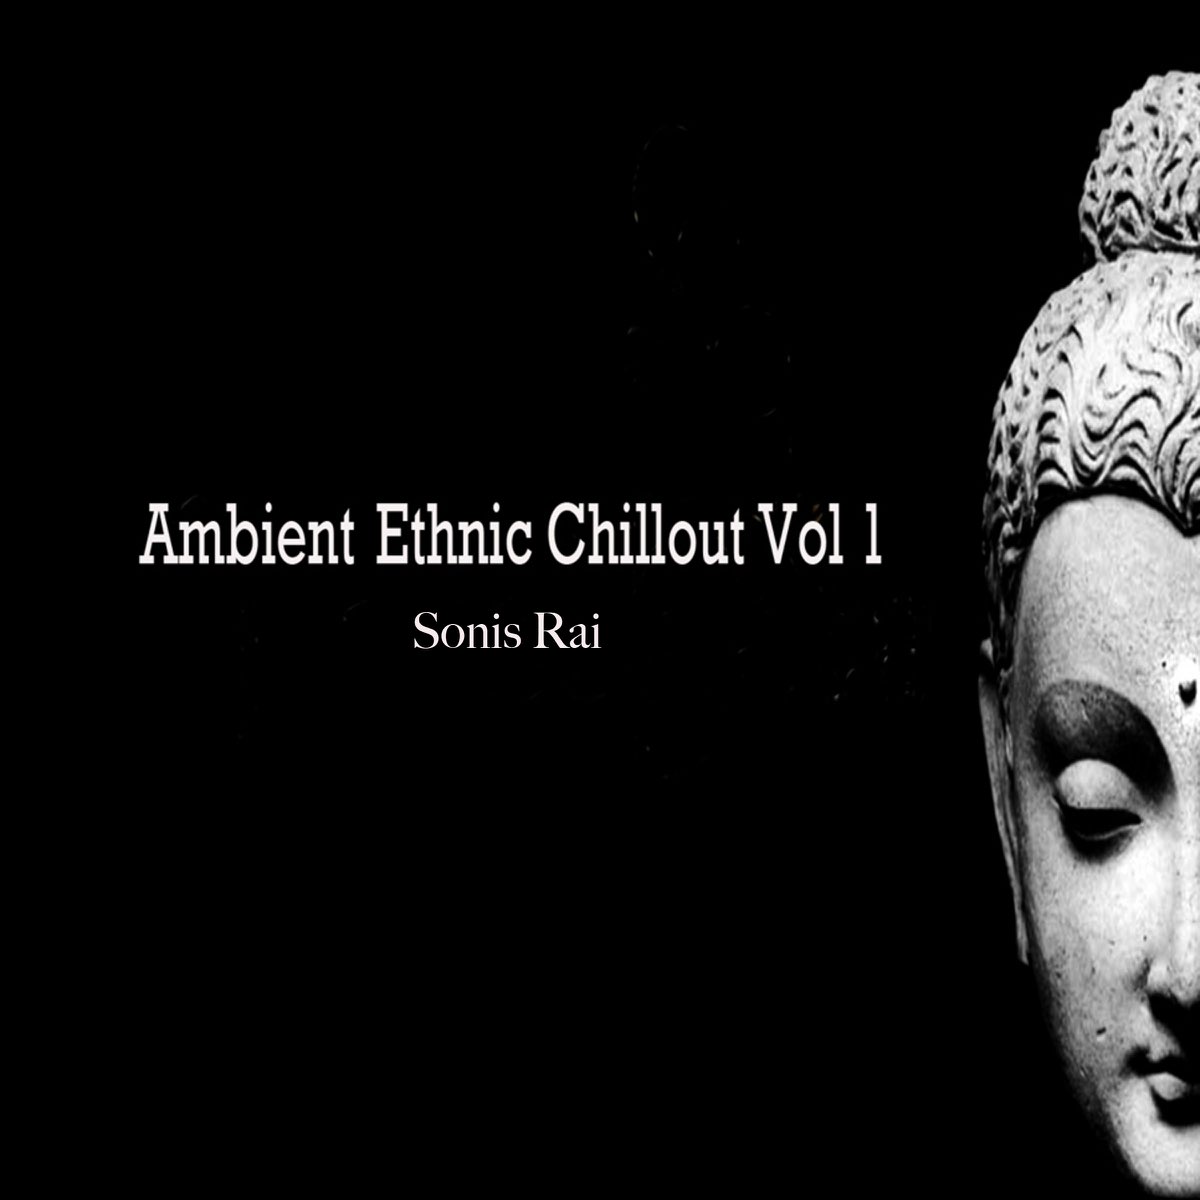 Ethnic chill. Chillout Vol 1.